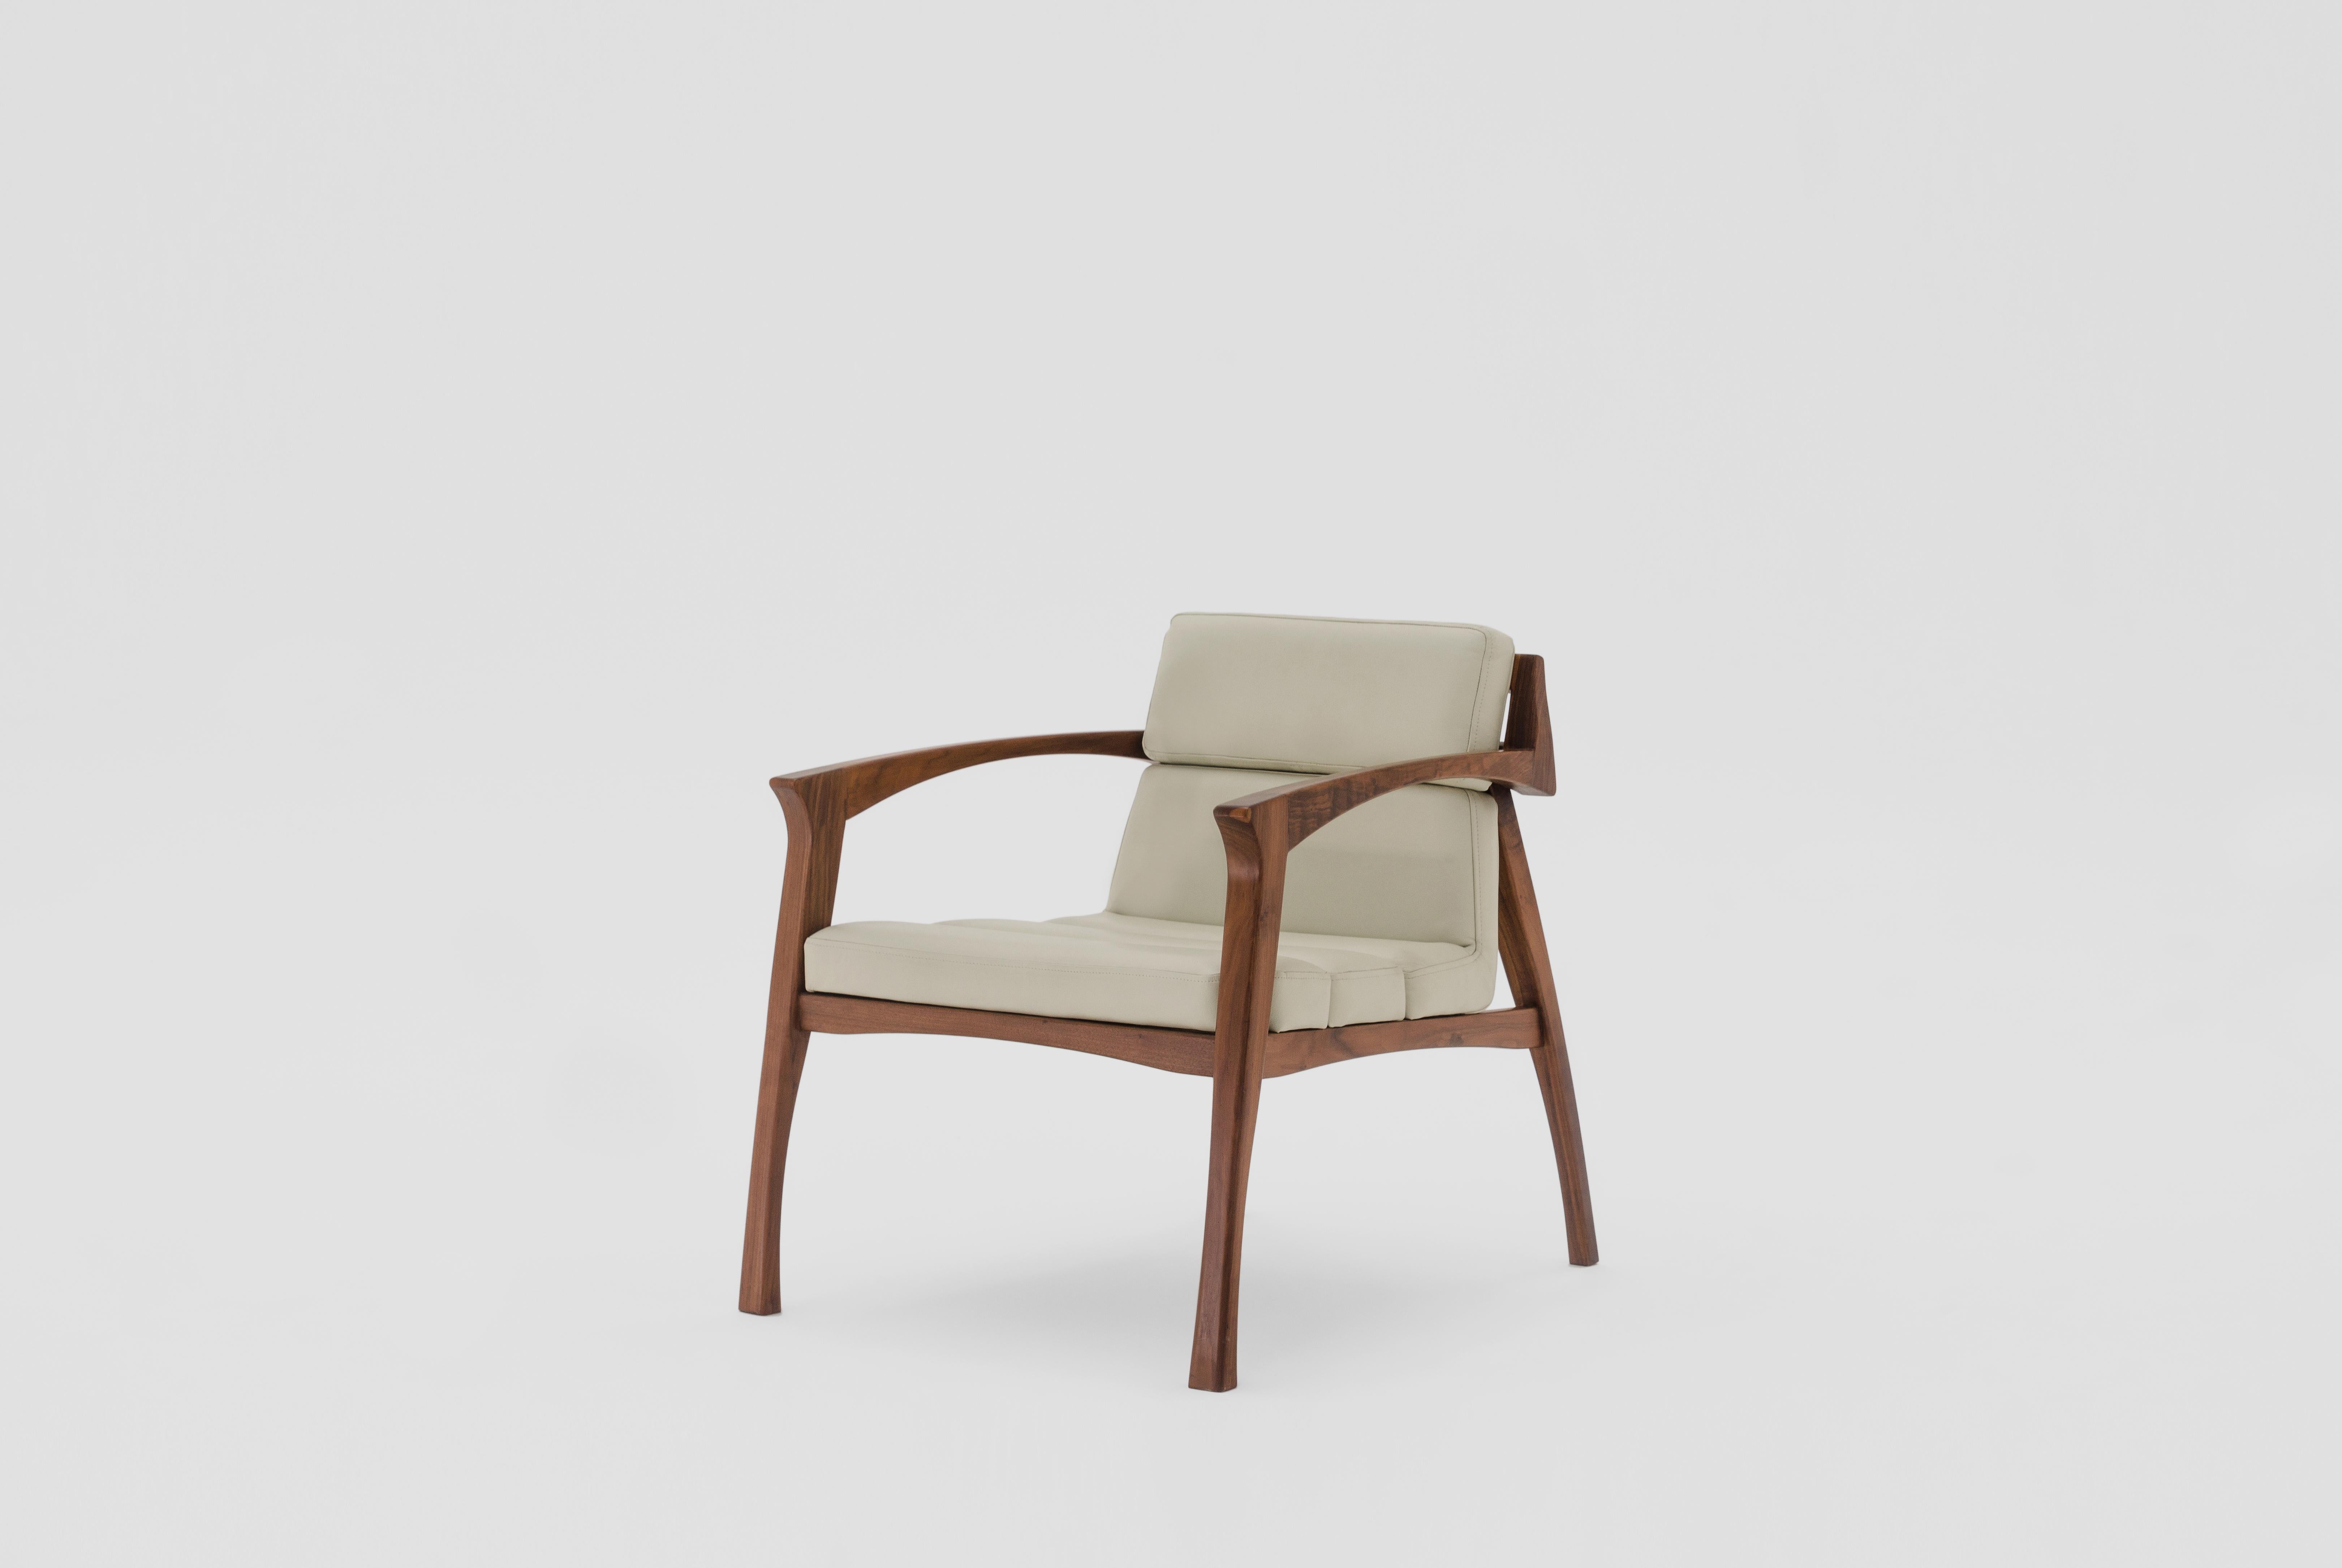 White helmut armchair by Arturo Verástegui
Dimensions: D 72 x W 76 x H 70 cm
Materials: walnut wood, leather.

Armchair made of solid holm walnut, leather.

Arturo Verástegui has been the director and founder of BREUER since 2015. Arturo began